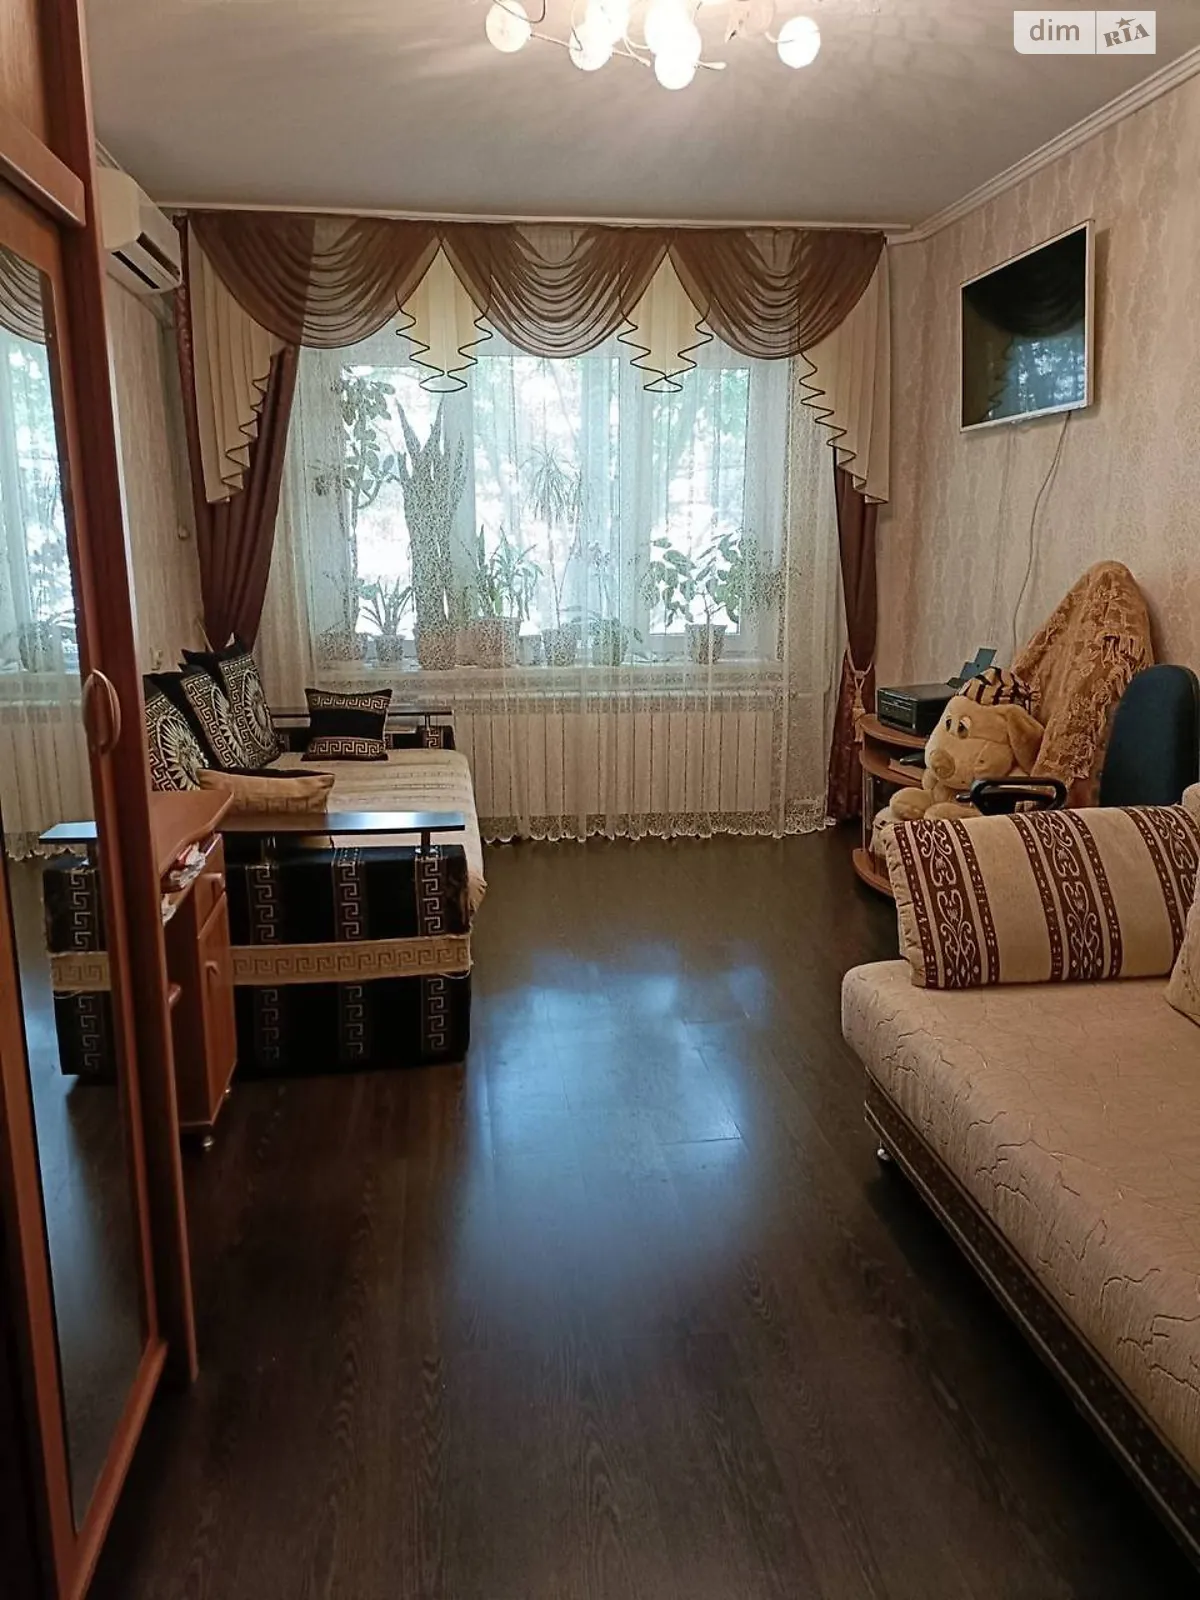 Продается комната 18 кв. м в Одессе, цена: 15500 $ - фото 1